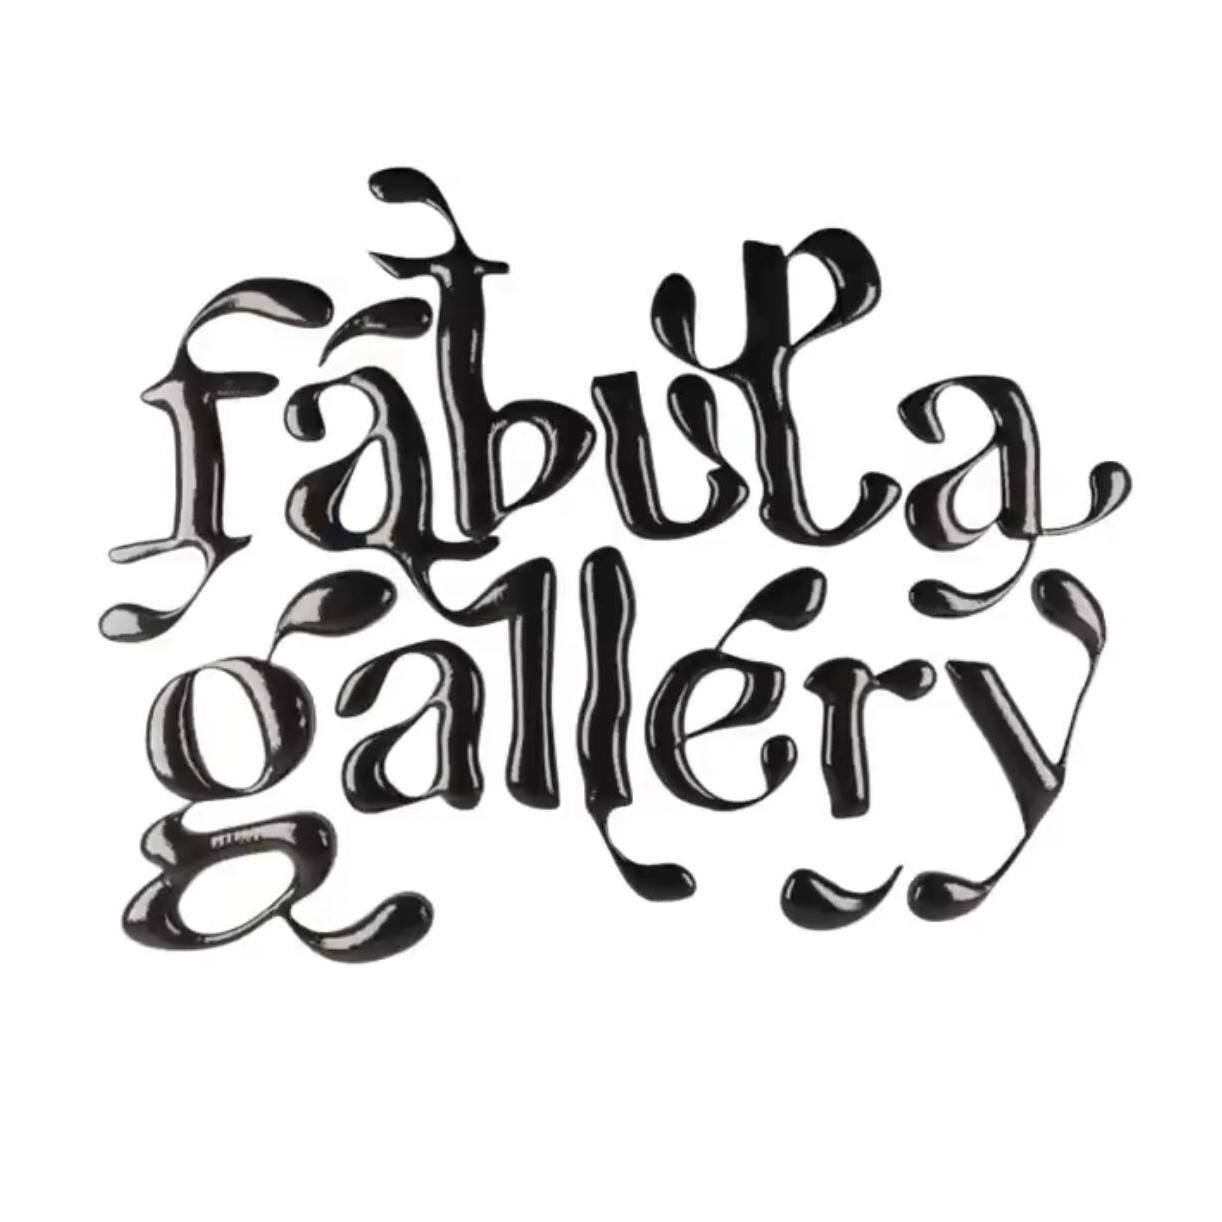 Fābula Gallery